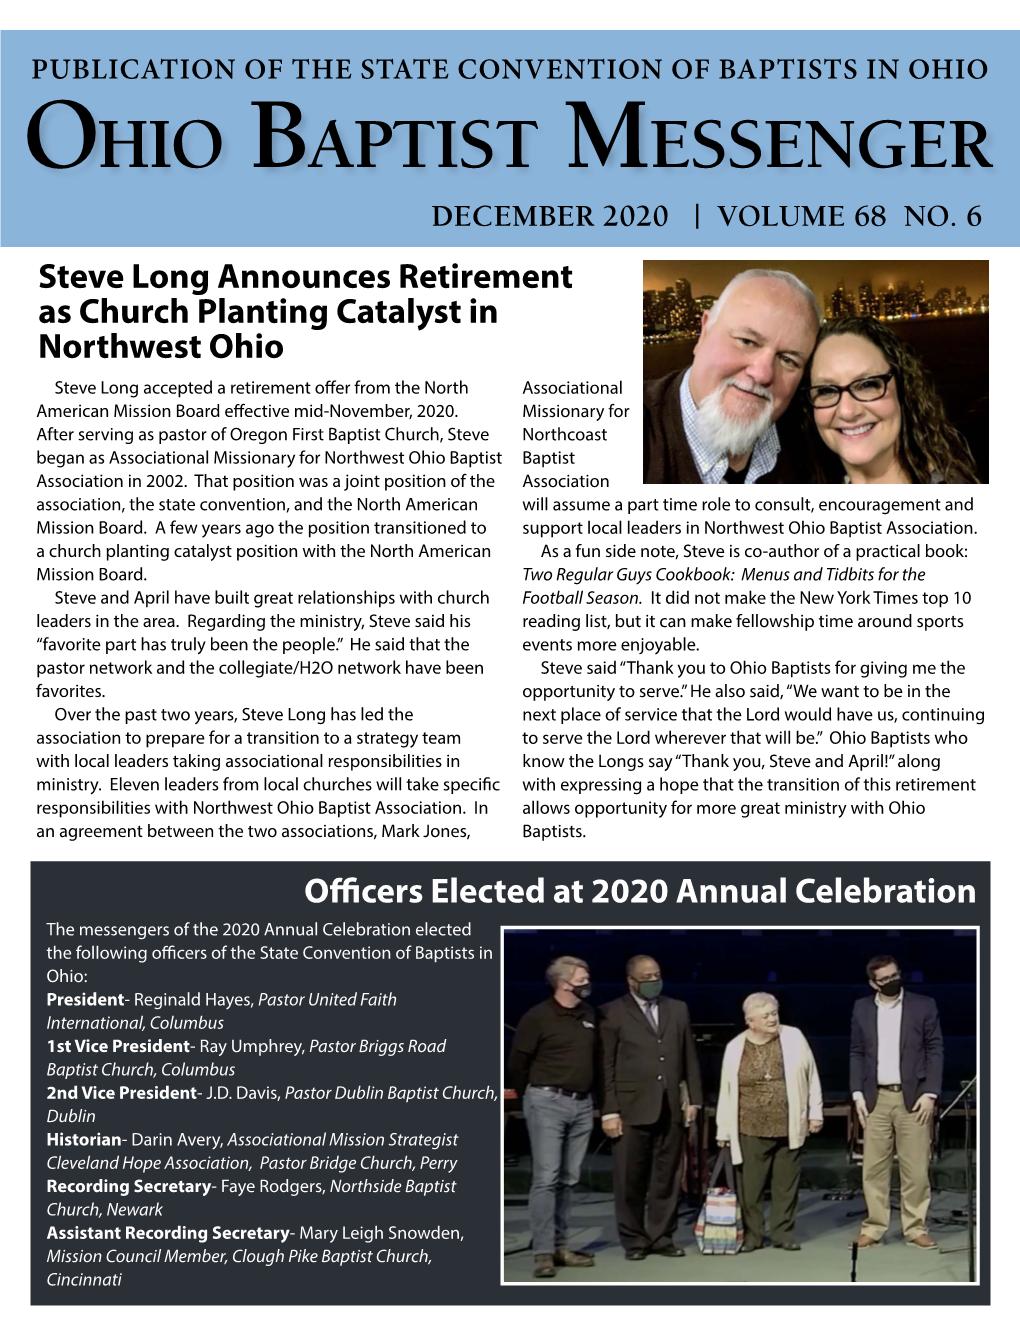 Ohio Baptist Messenger | Page 1 PUBLICATION of the STATE CONVENTION of BAPTISTS in OHIO Ohio Baptist Messenger DECEMBER 2020 | VOLUME 68 NO